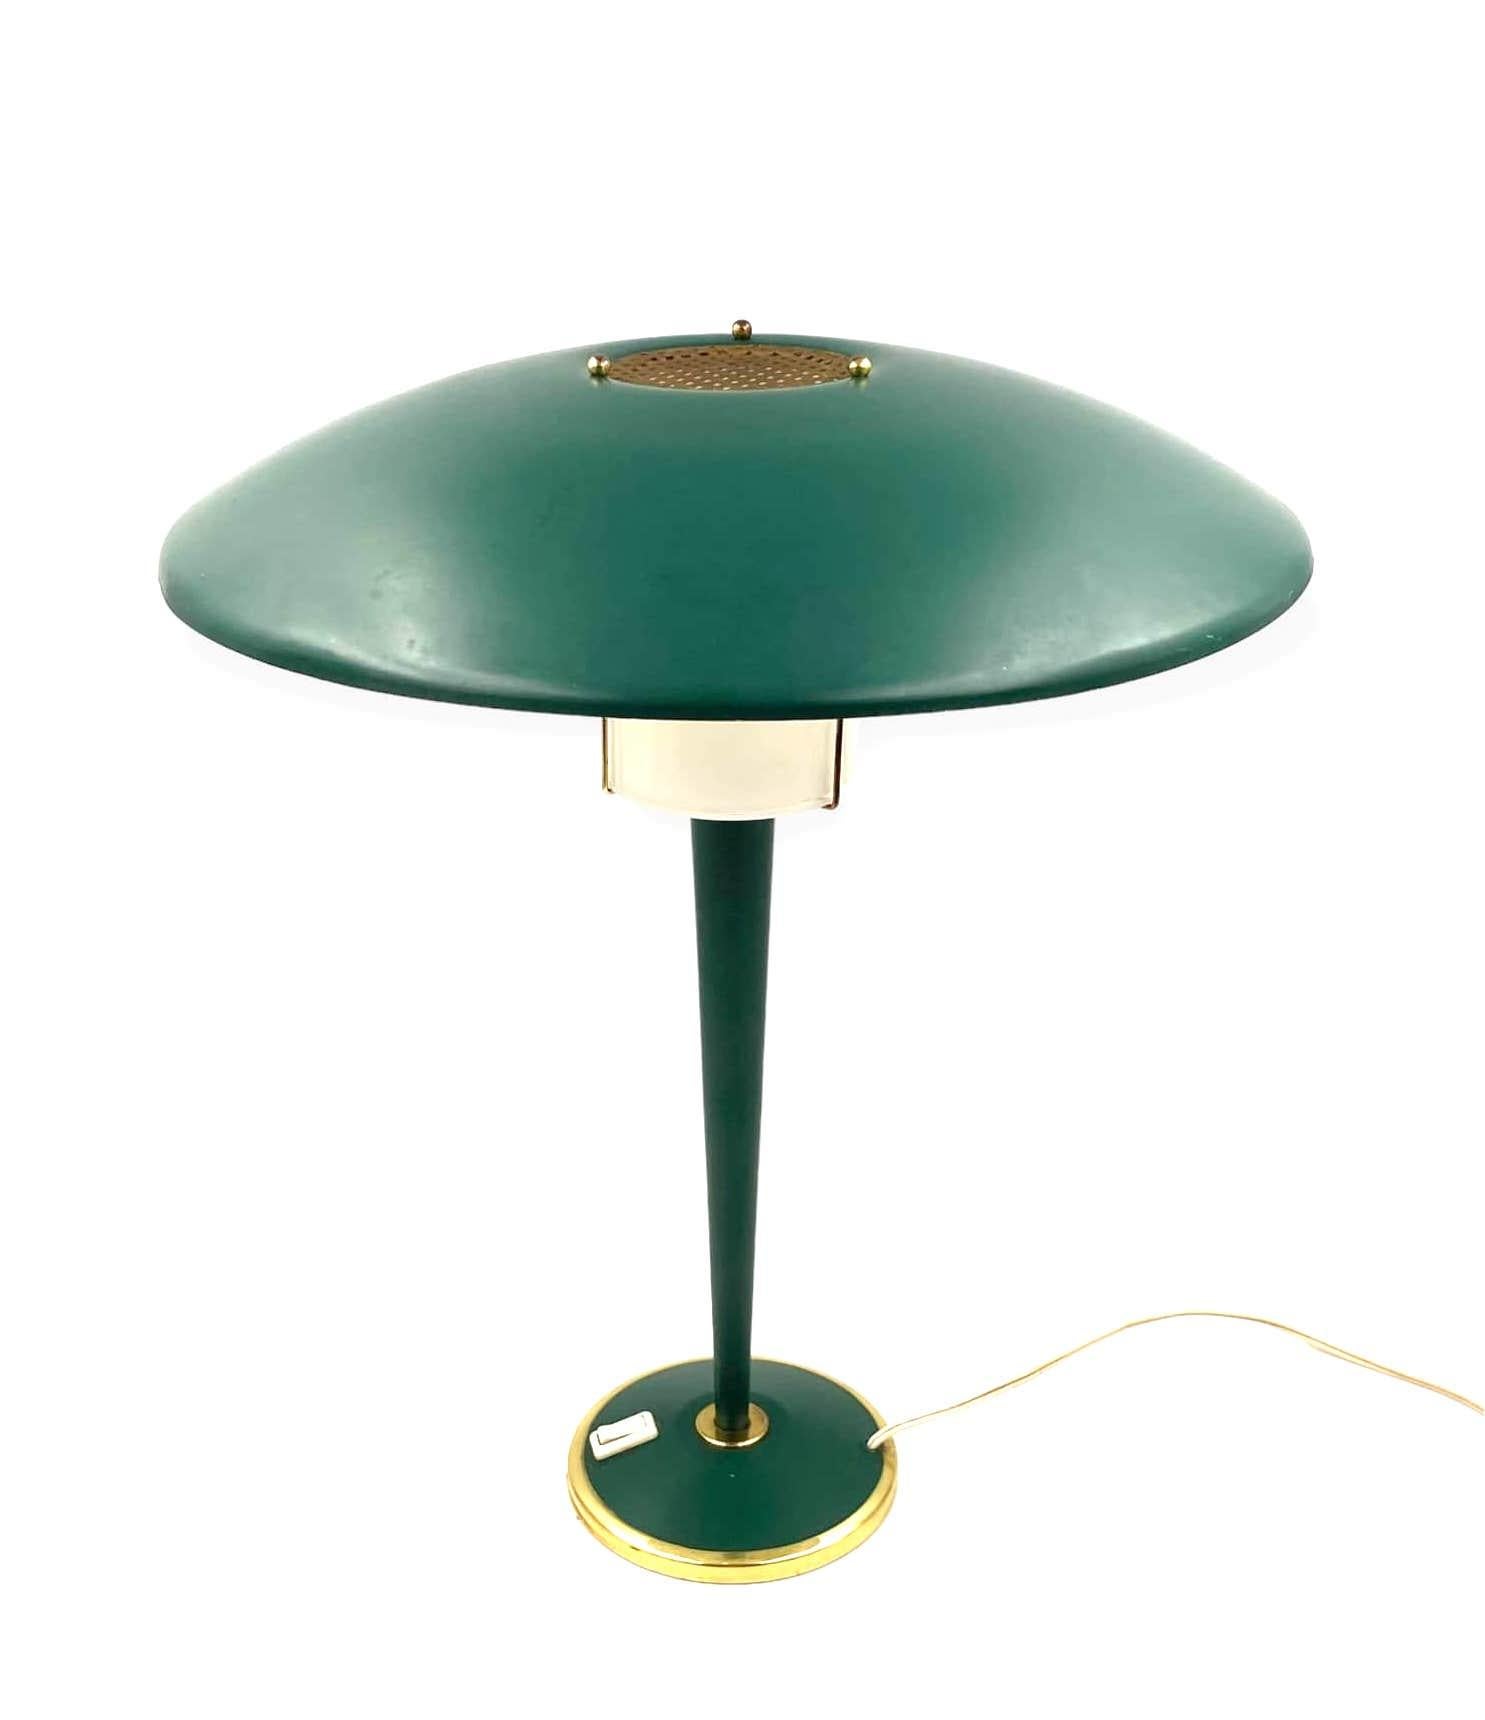 Aluminum Modernist Petrol Green Table Lamp, France, 1960s For Sale